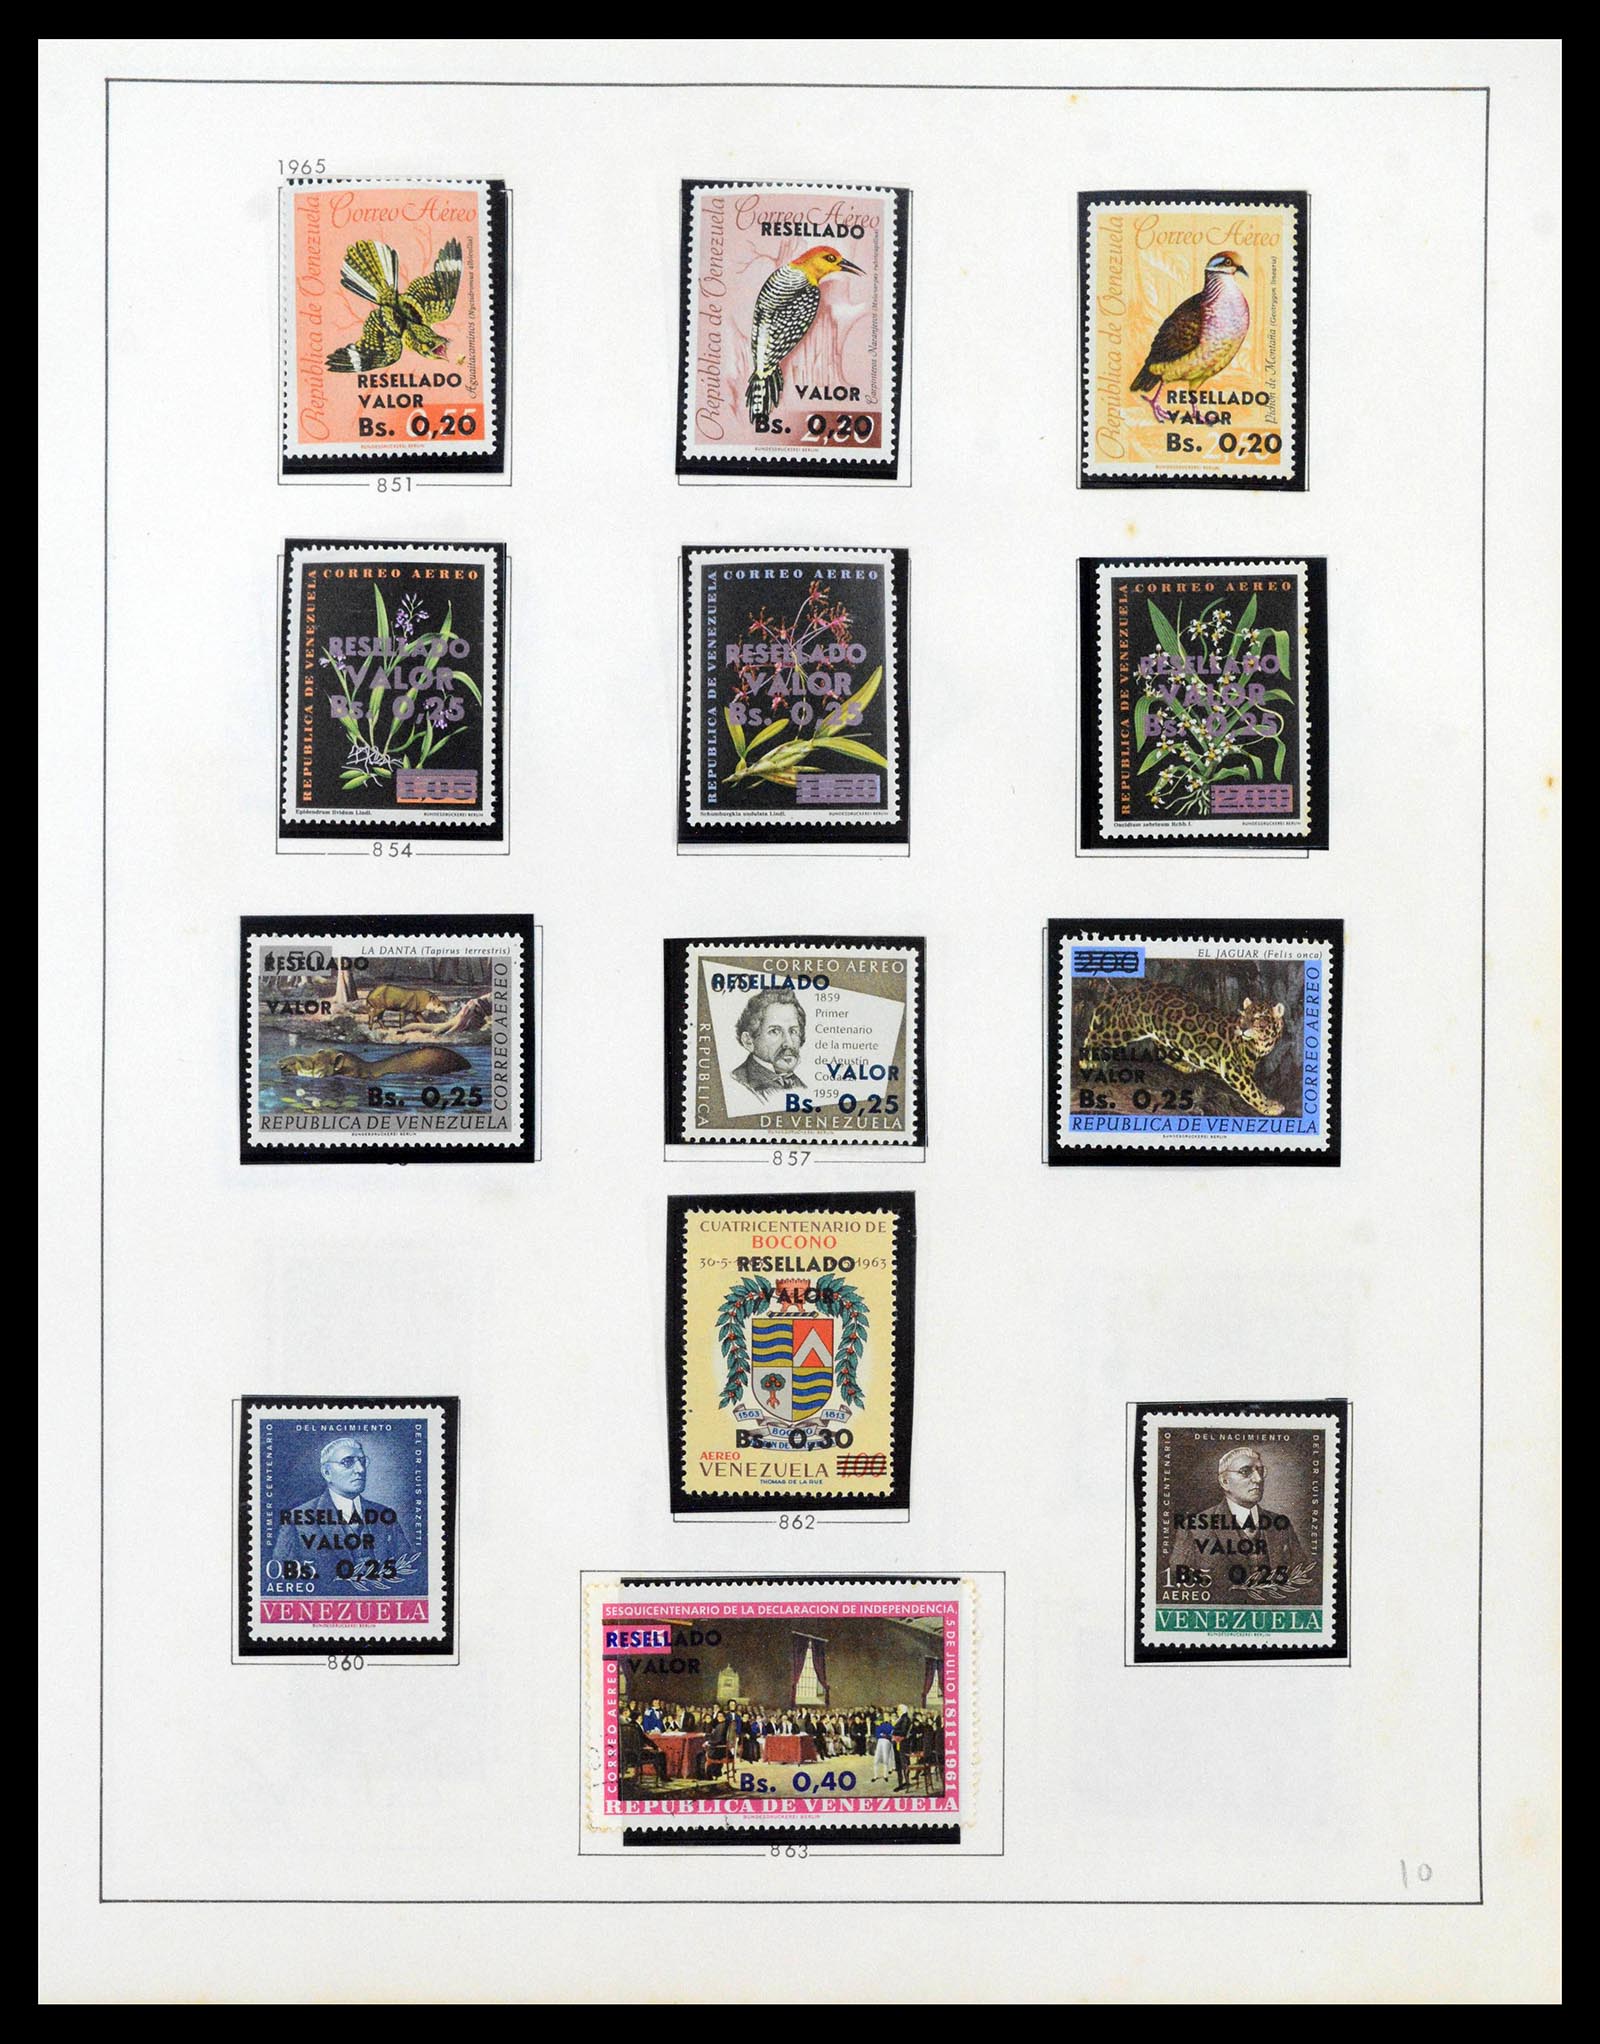 39436 0057 - Stamp collection 39436 Venezuela 1859-1985.